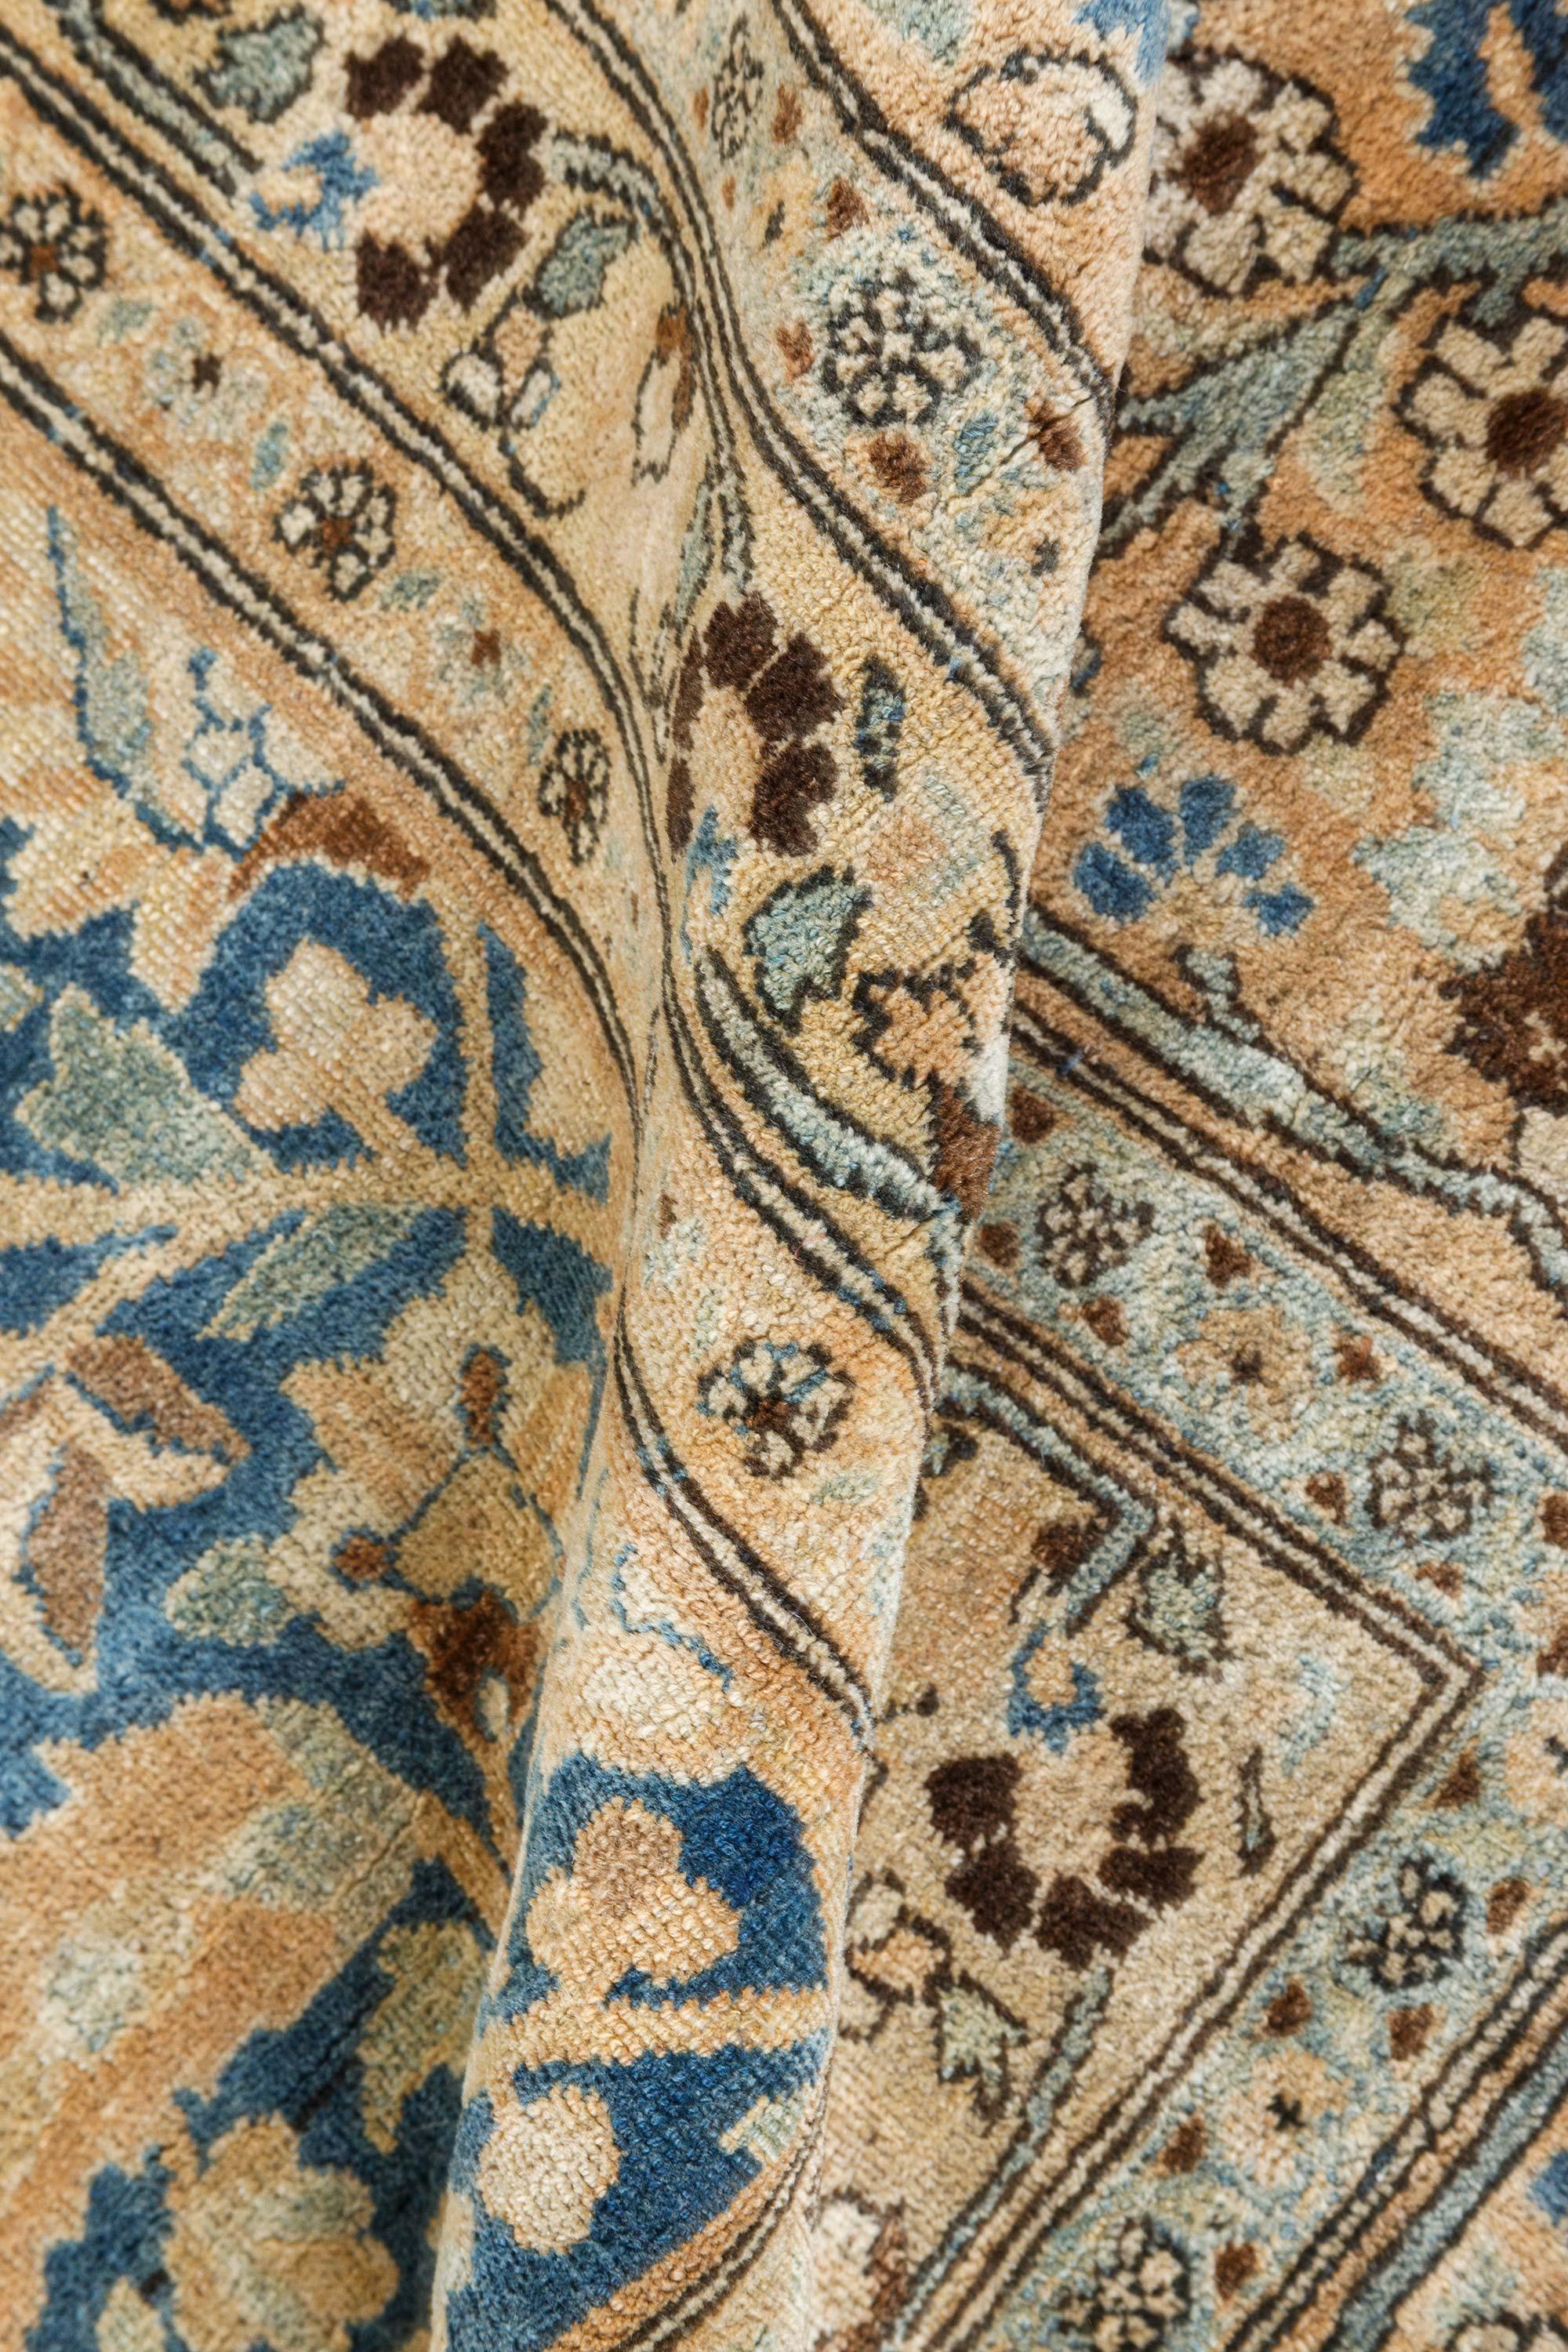 Authentic 19th century Persian Tabriz handmade wool carpet
Size: 10'9